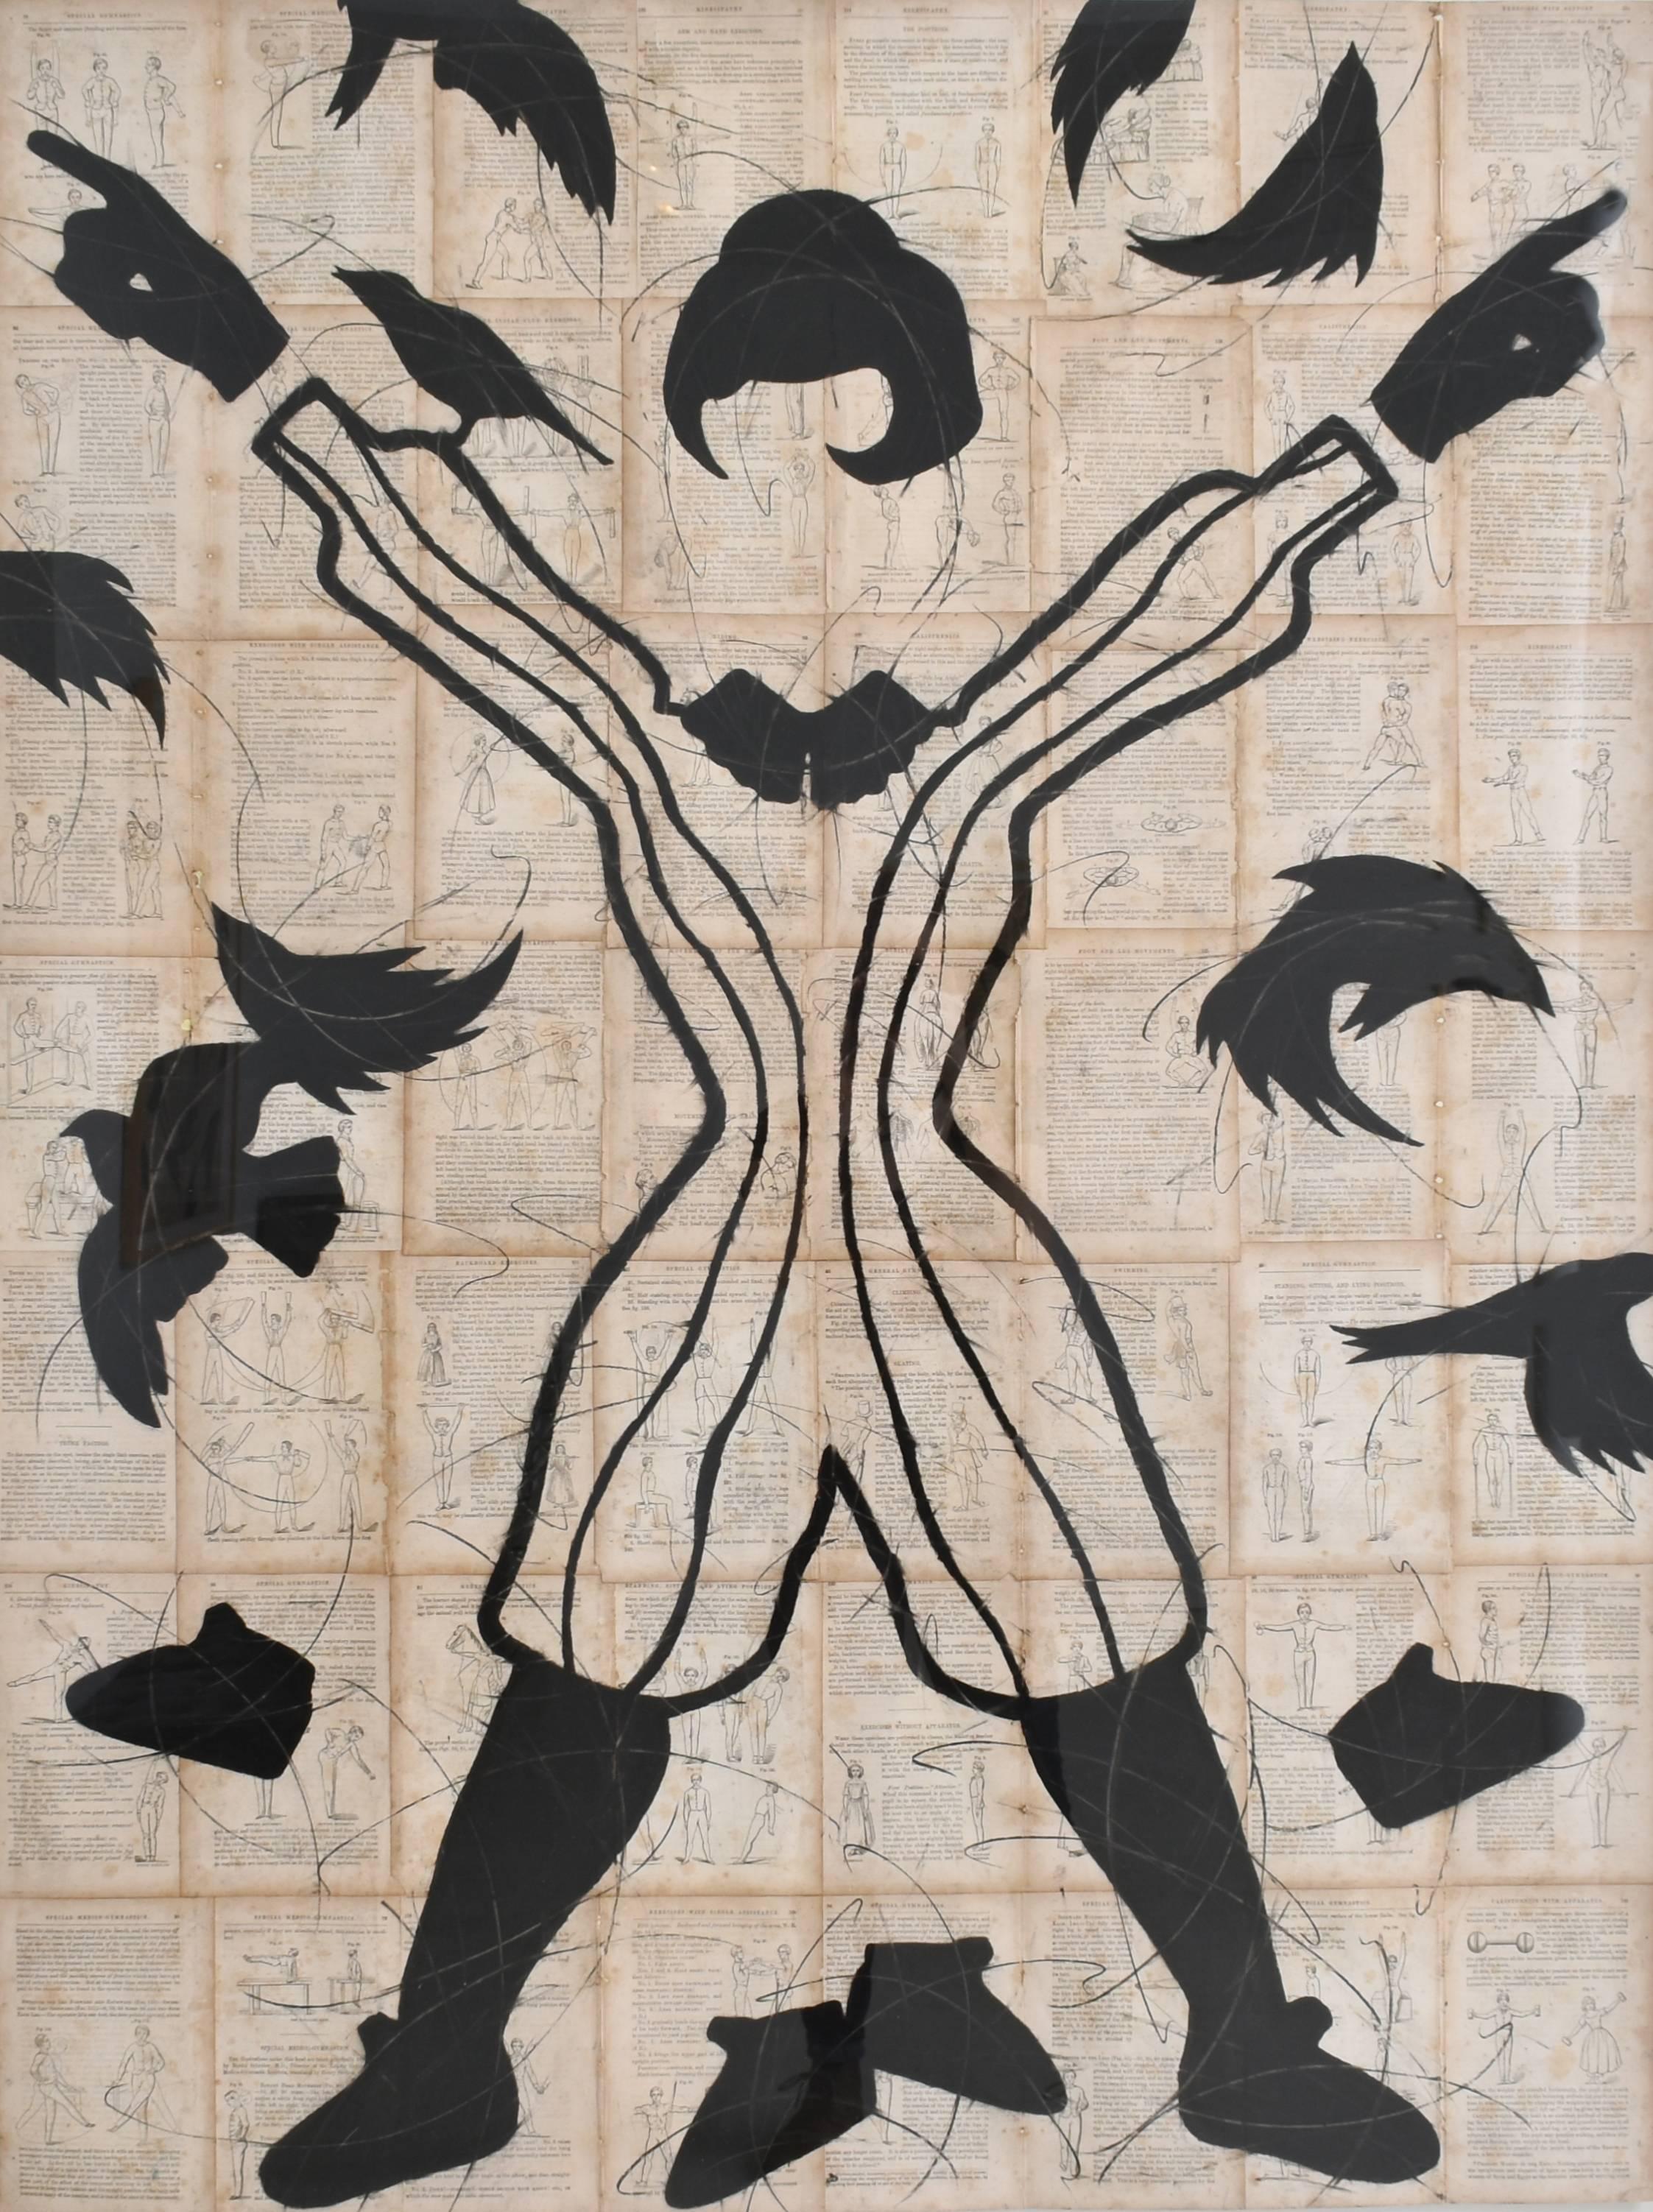 Vitruvian Woman (Figurative Chalk Drawing of a Female Silhouette & Black Birds)